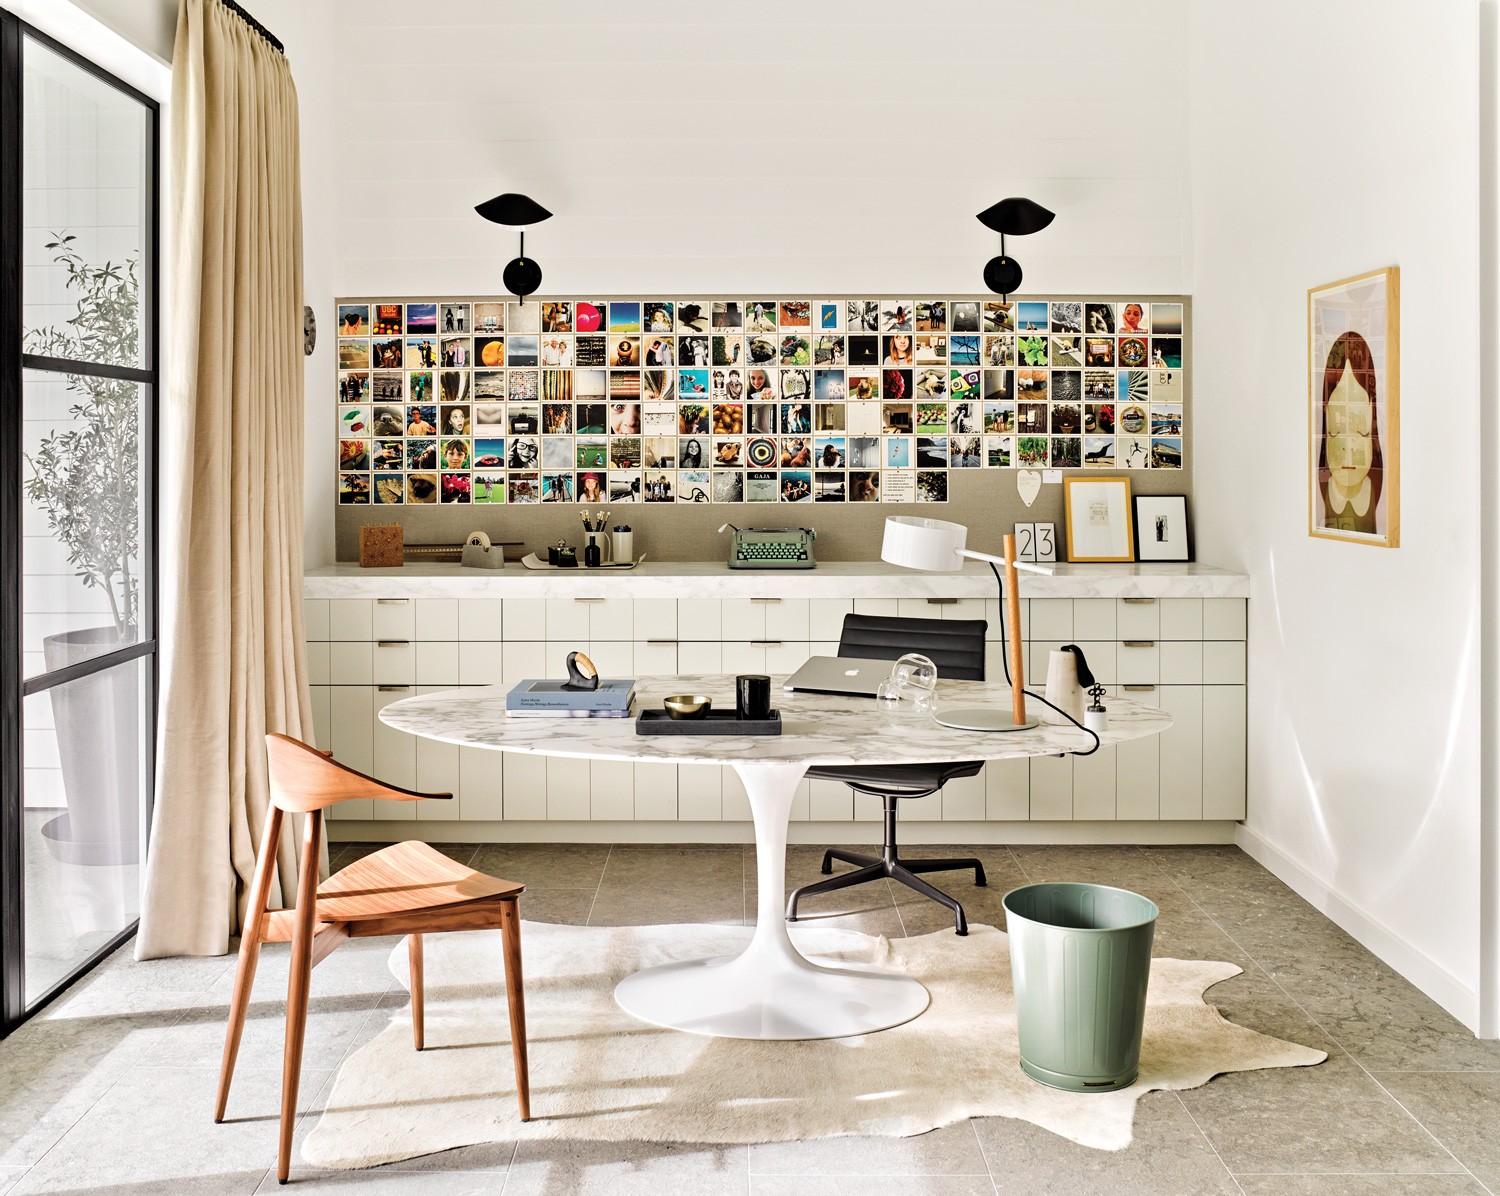 Home Office Ideas To Complete Your Interior Design | Hommés Studio